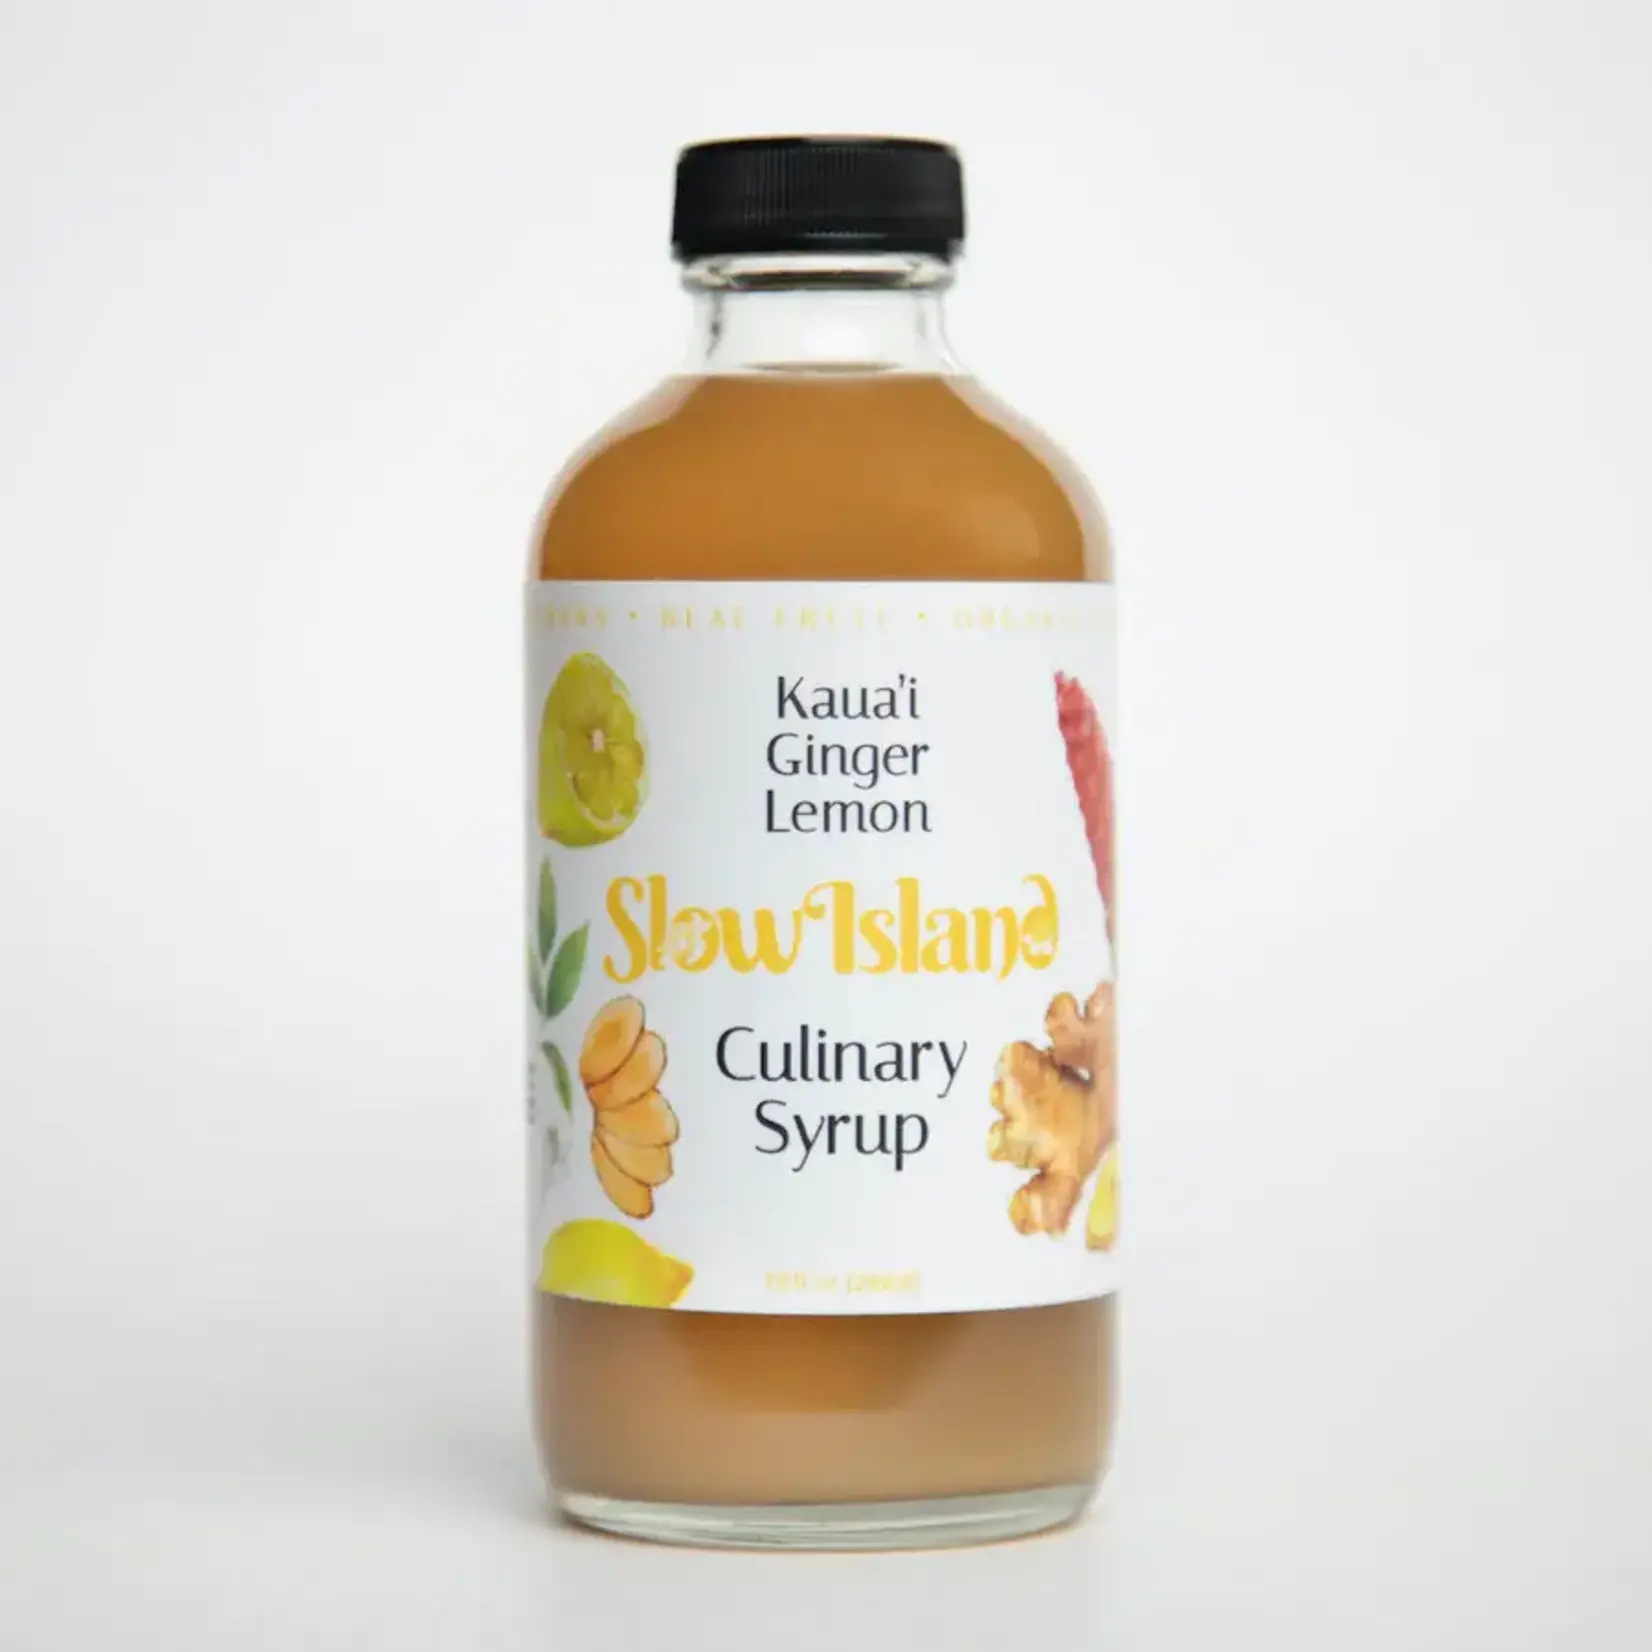 Slow Island Co. Ginger Lemon Culinary Syrup 10 oz.